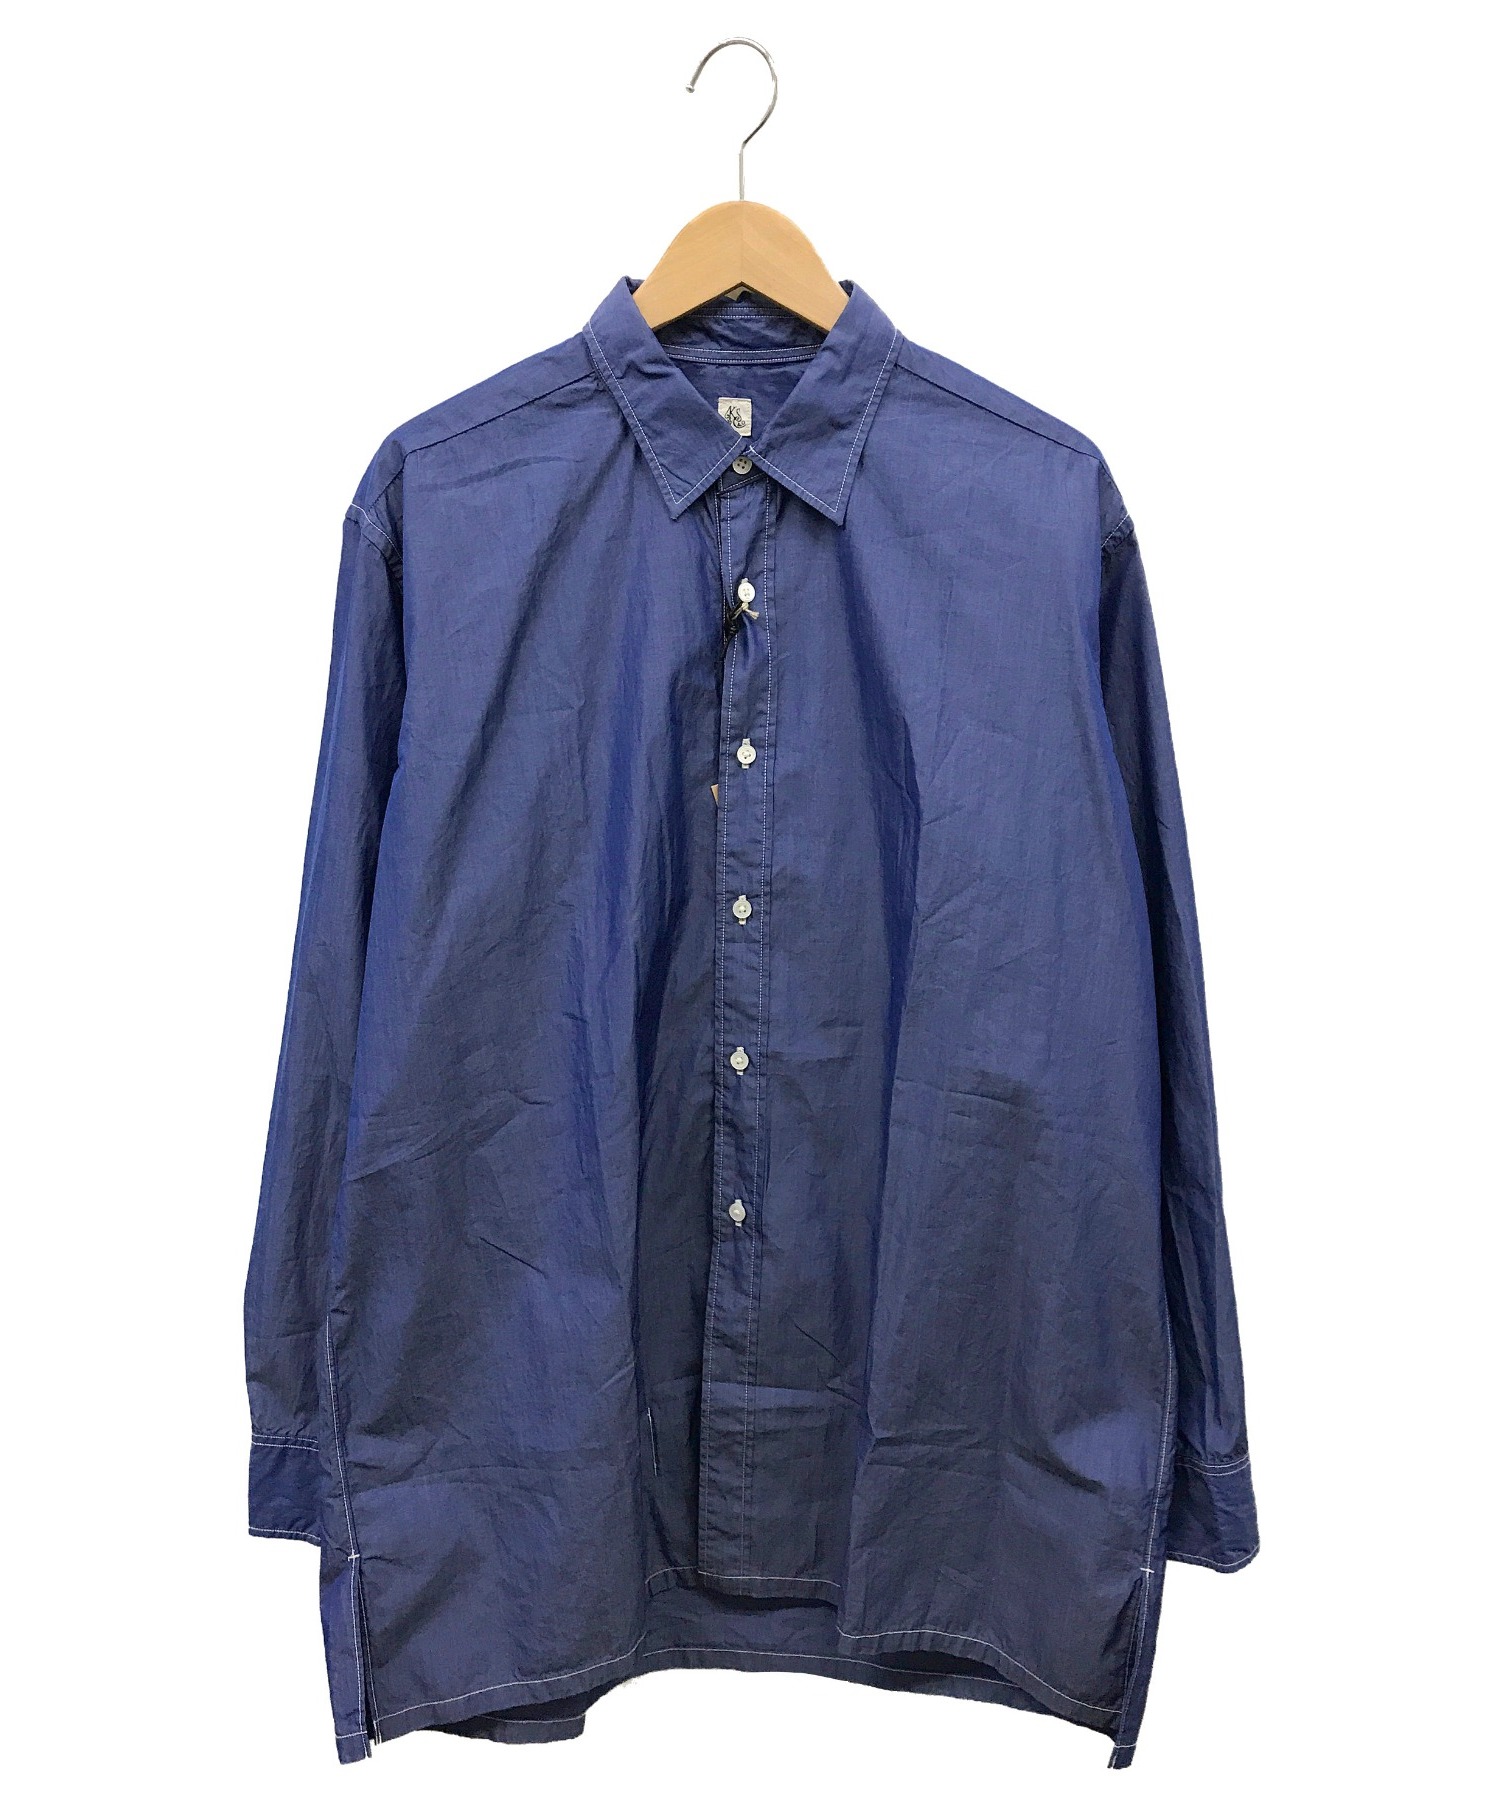 KAPTAIN SUNSHINE (キャプテンサンシャイン) レギュラーカラーシャツ ブルー サイズ:40 未使用品